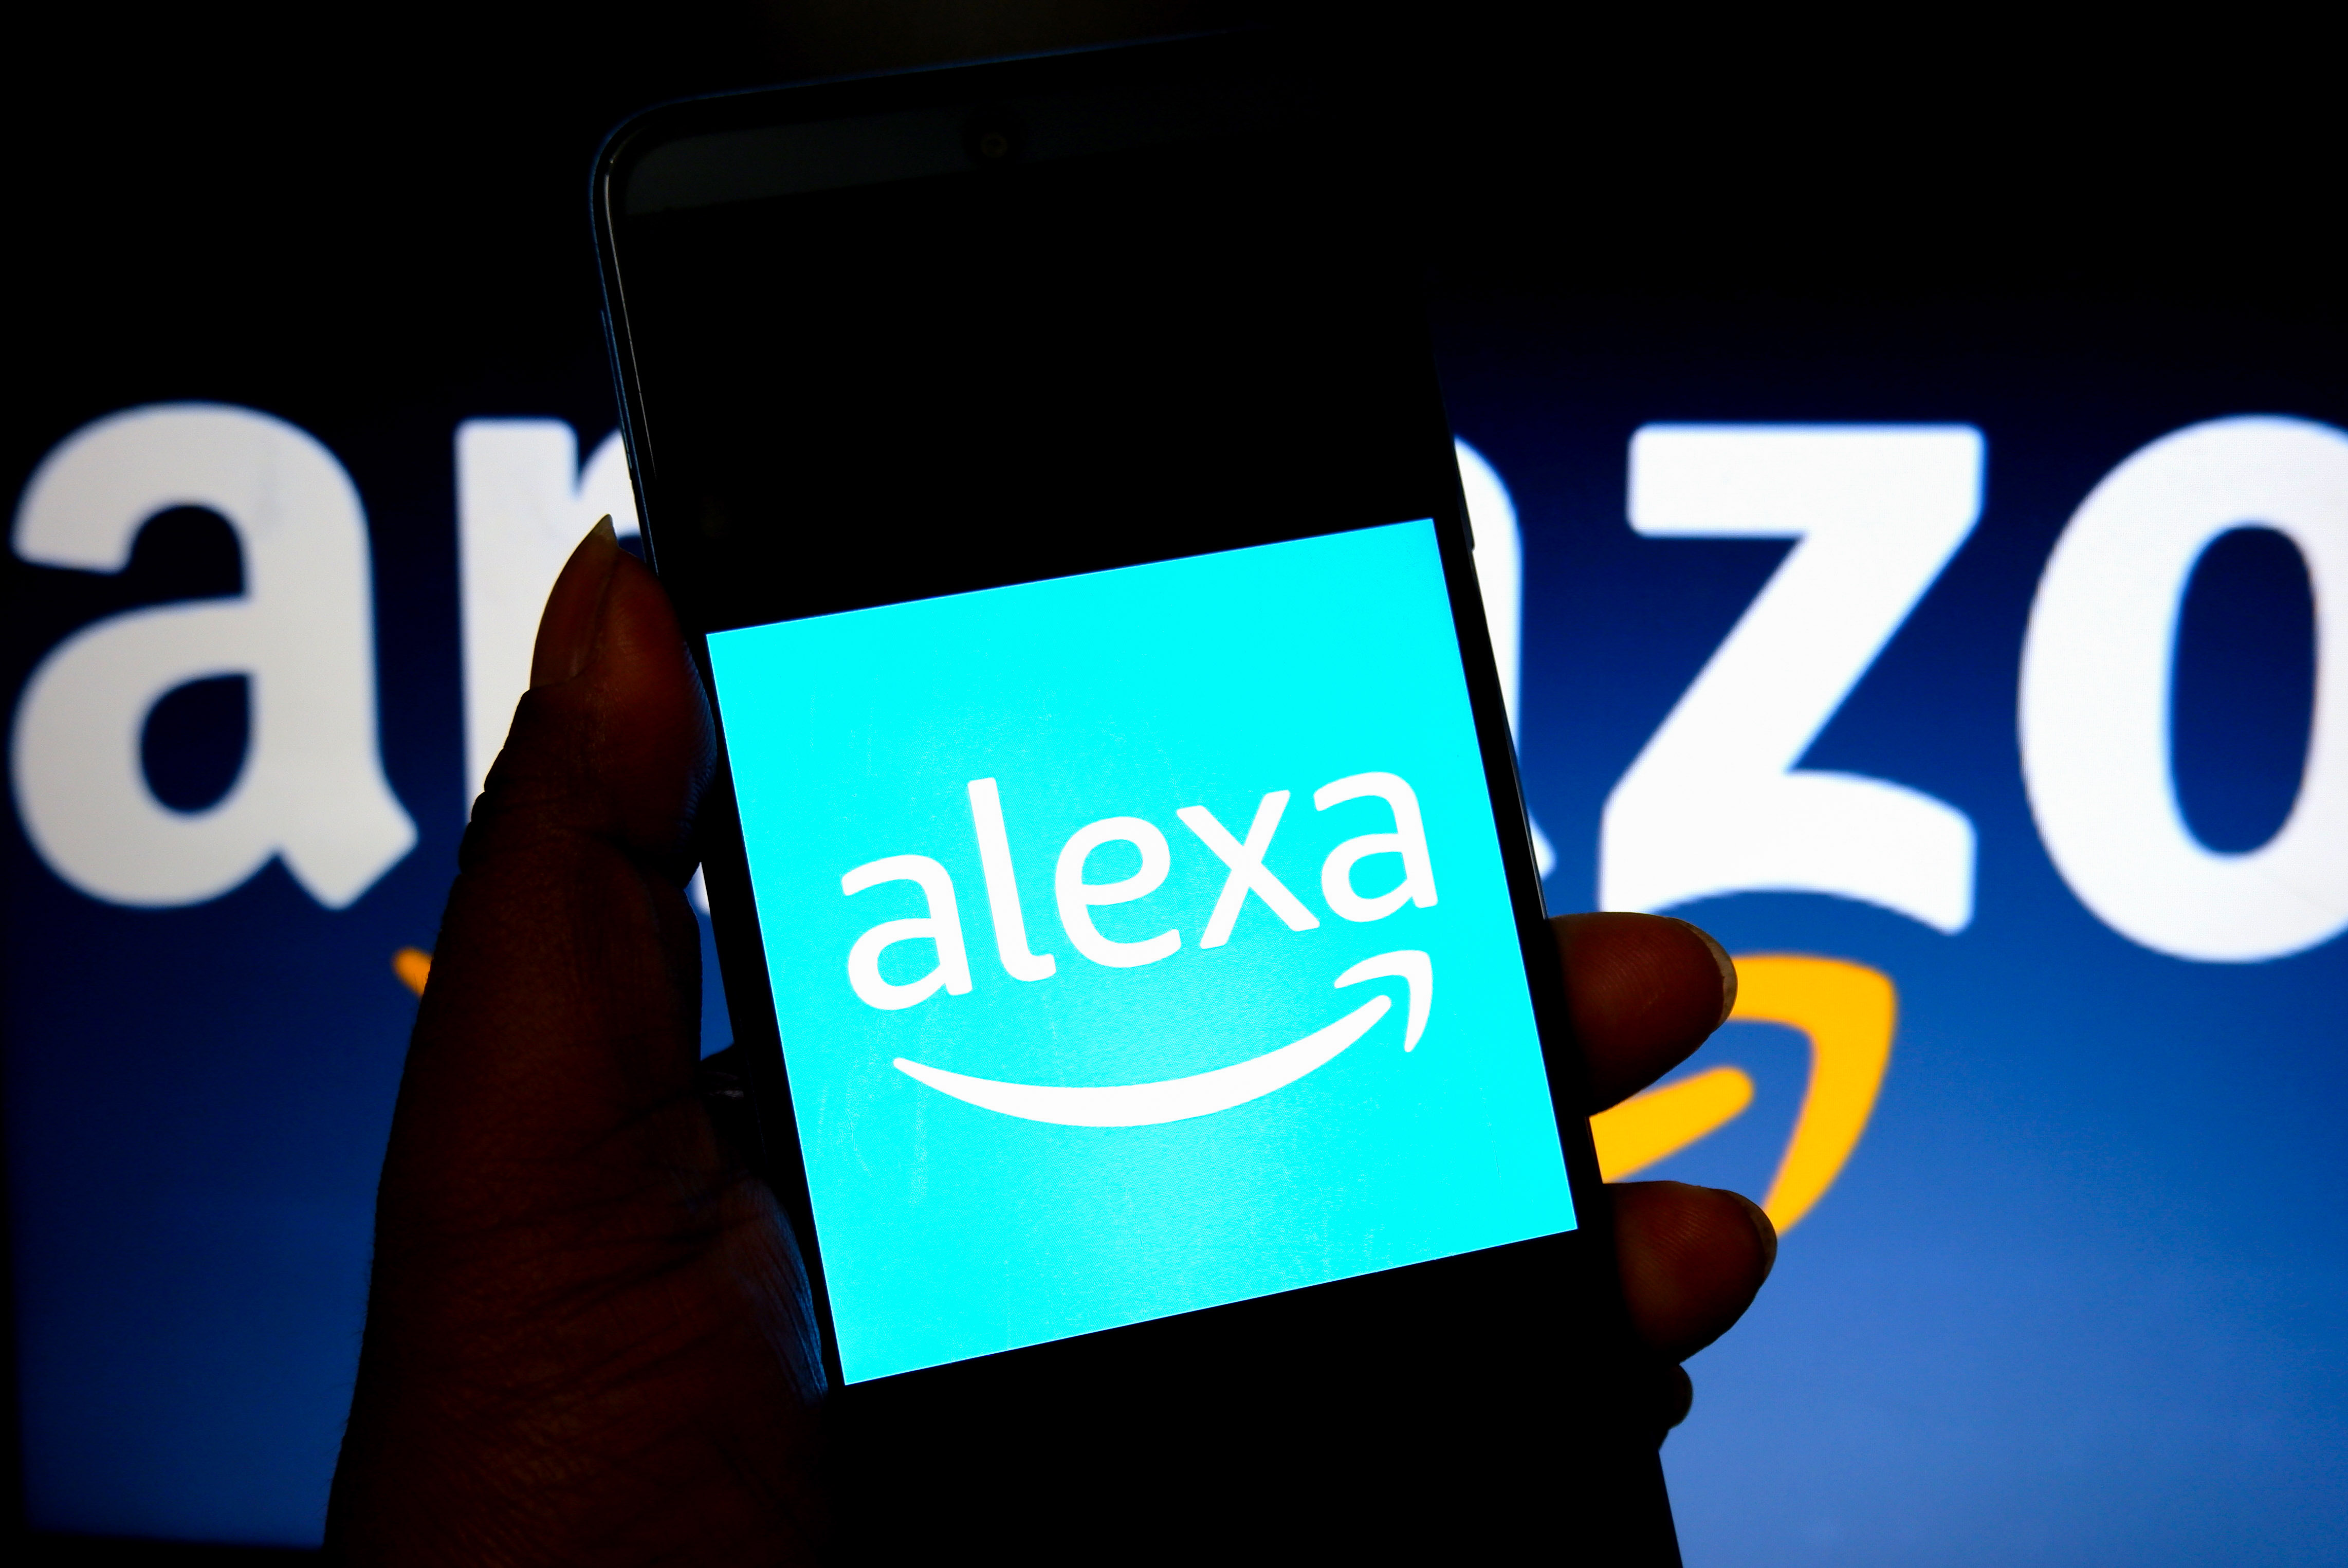 Amazon unveils ‘smarter and more conversational' Alexa amid AI race
among tech companies